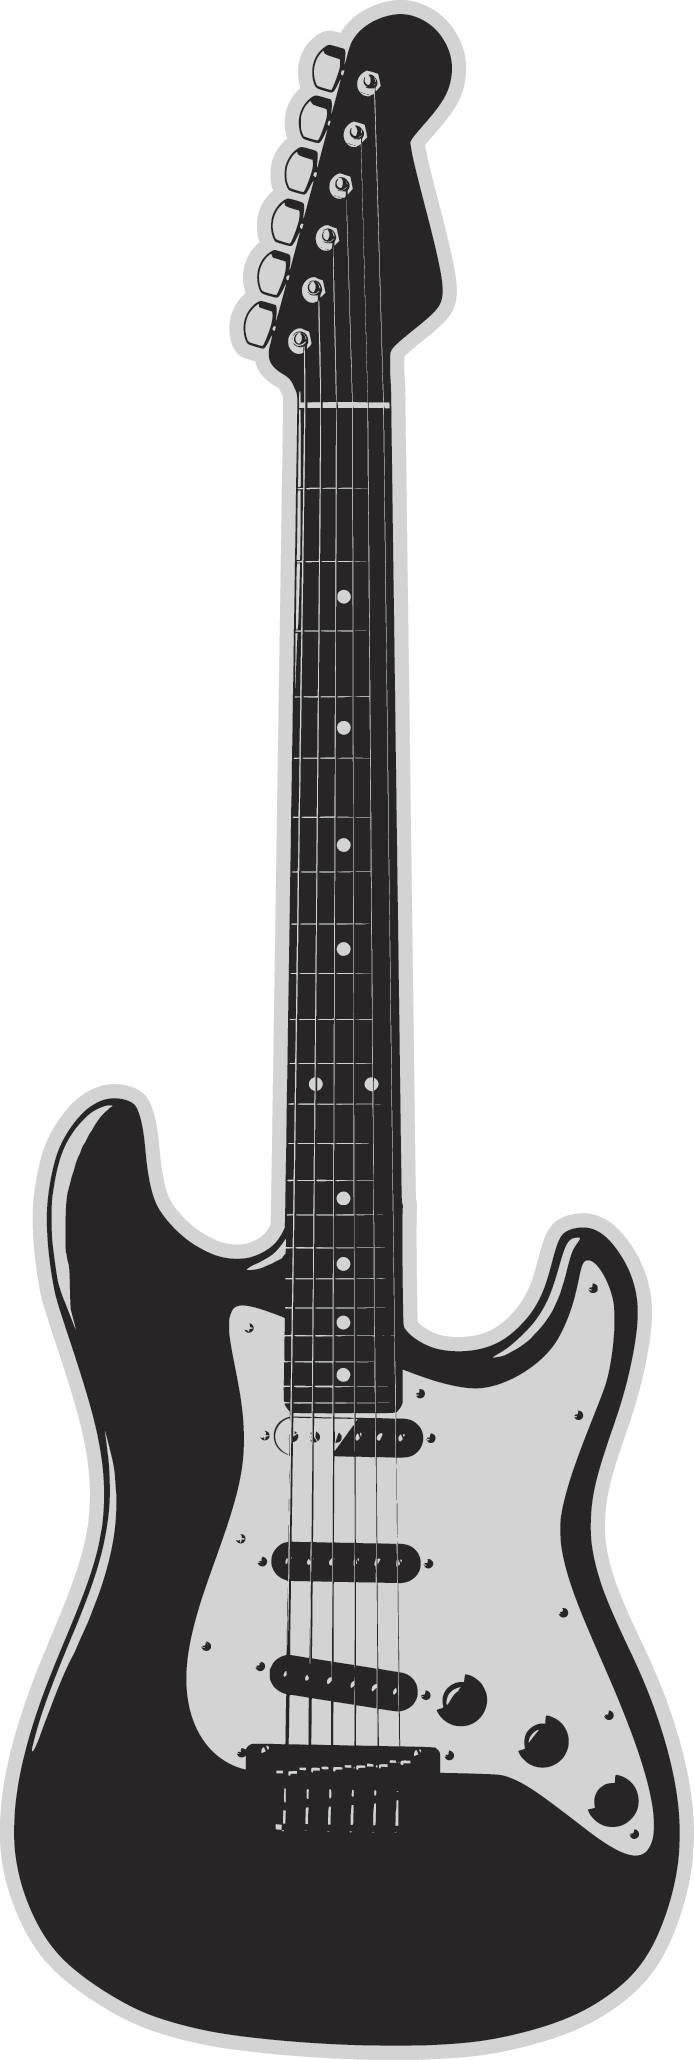 Rock Band Fender Stratocaster Musical instrument Electric guitar ...